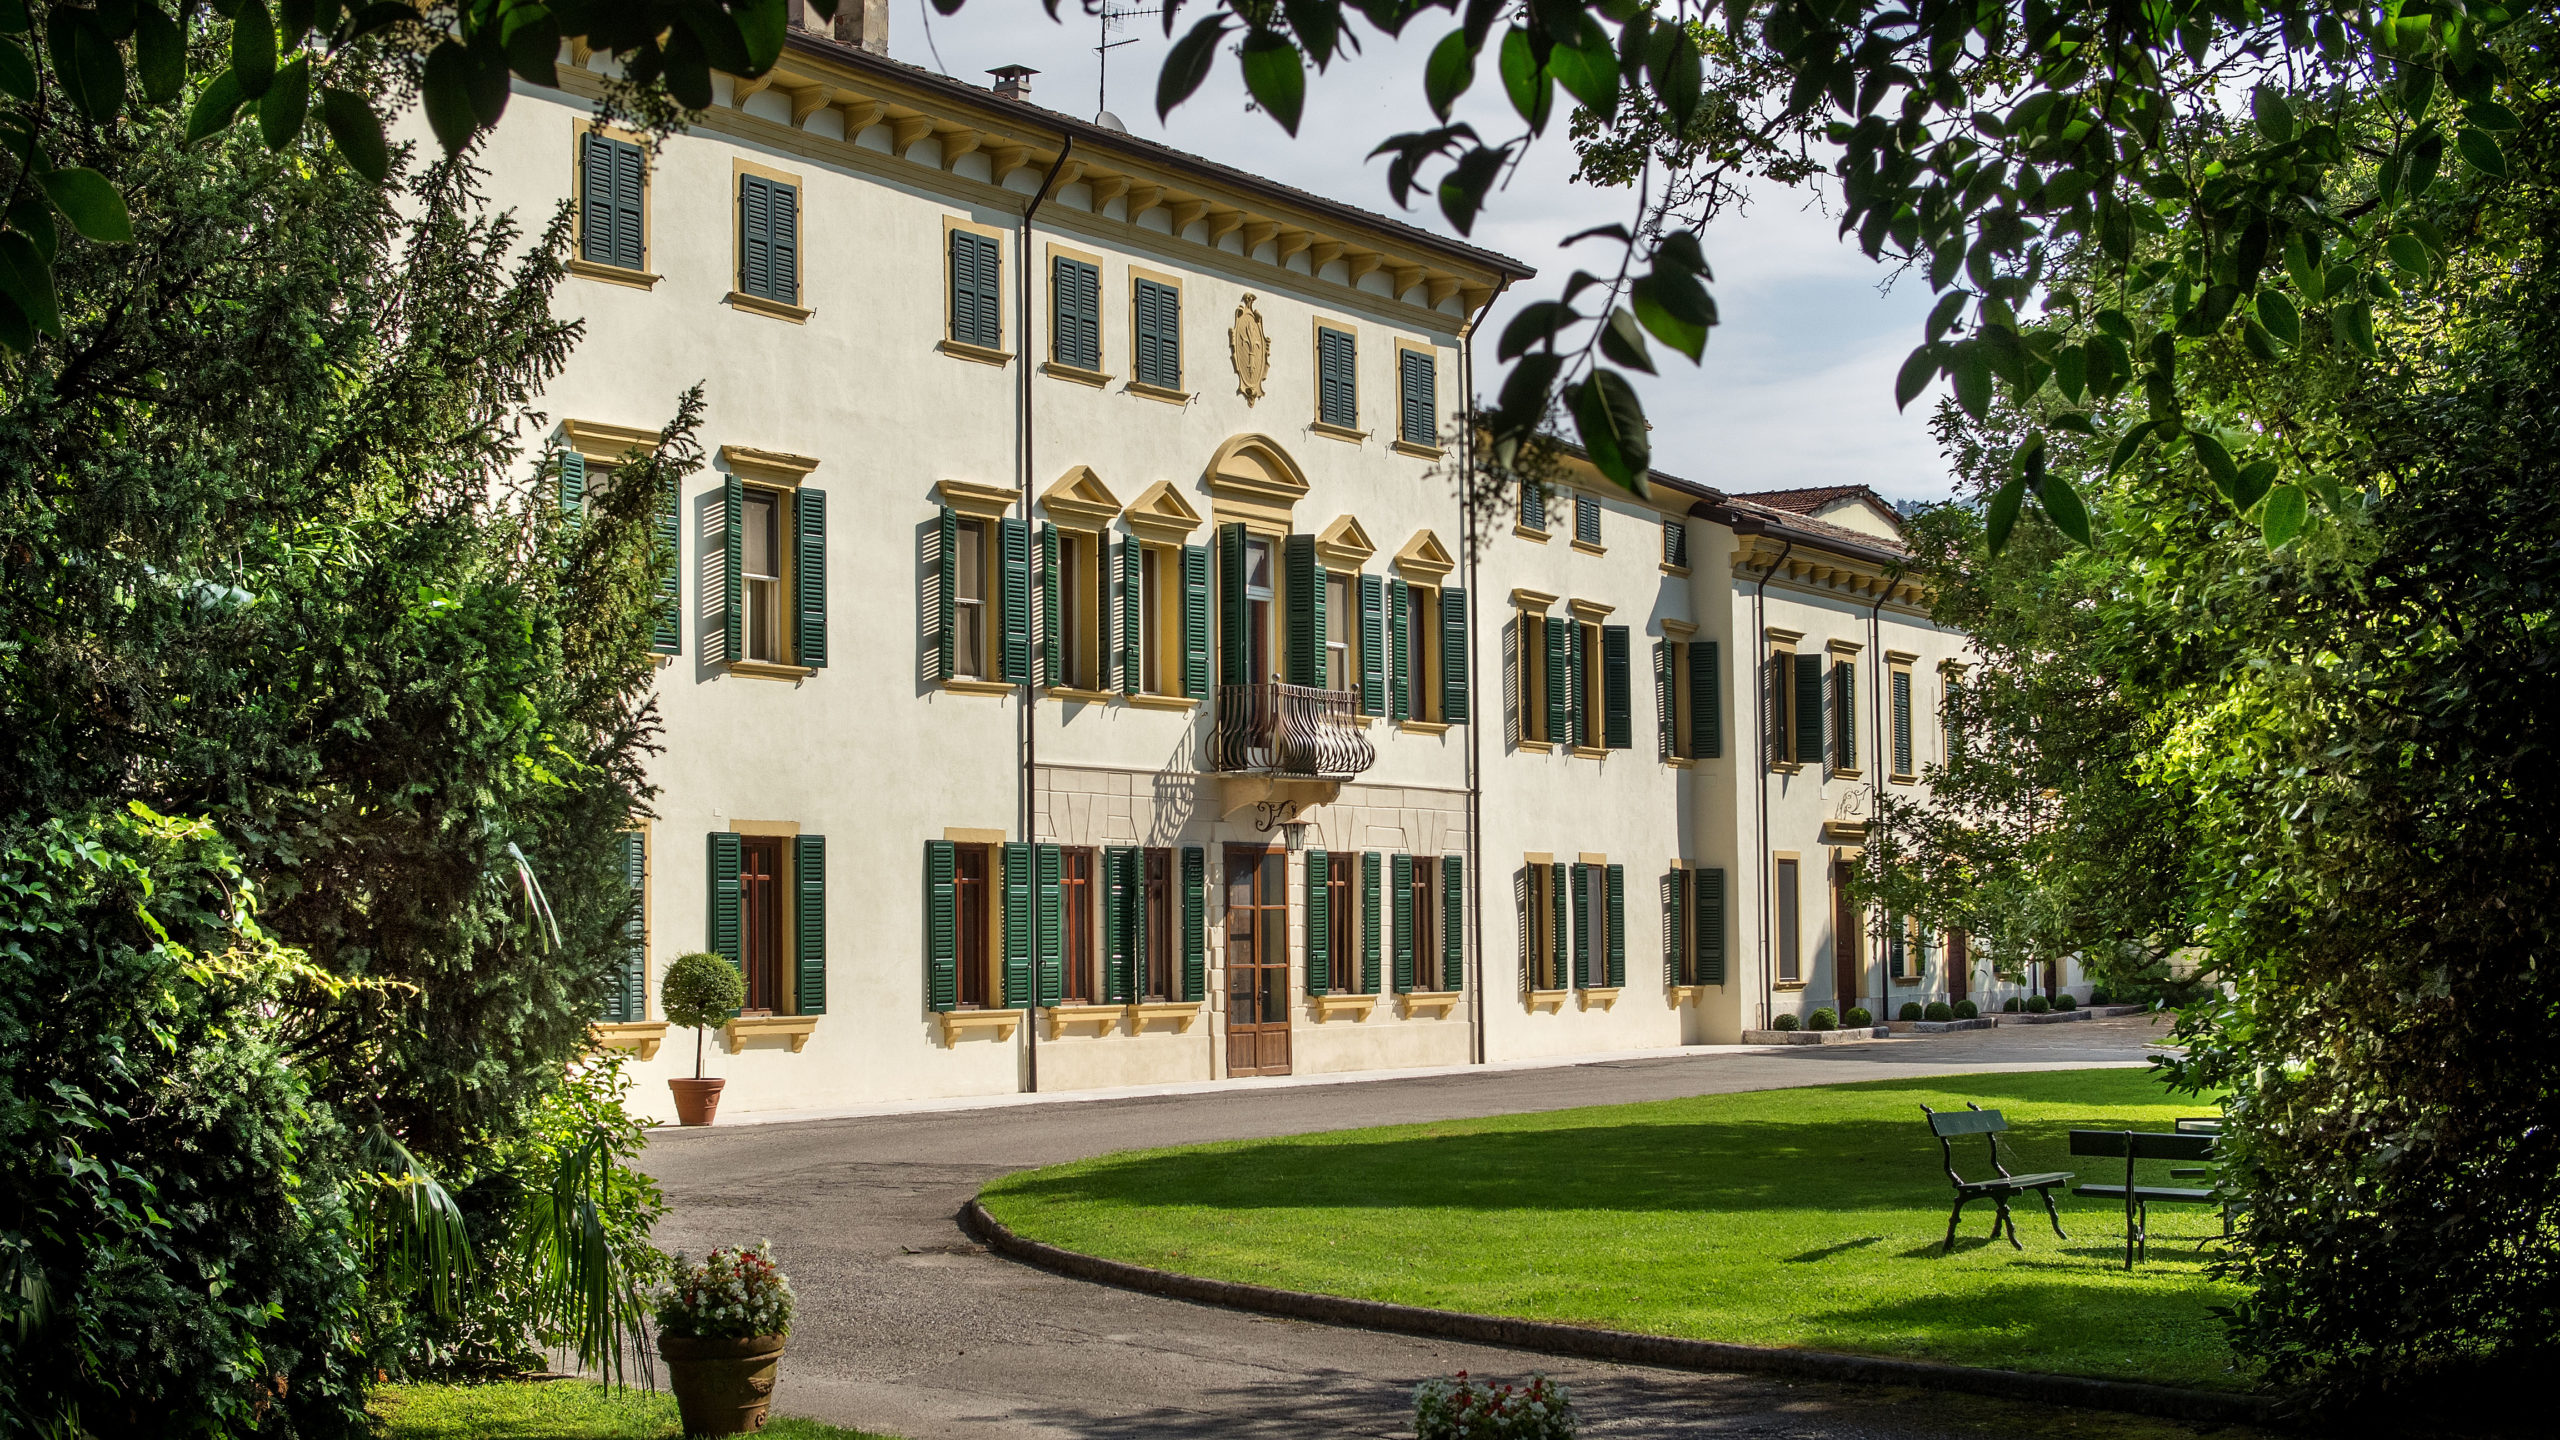 Villa Maria – Casa Sartori 1898: Centuries of Tradition